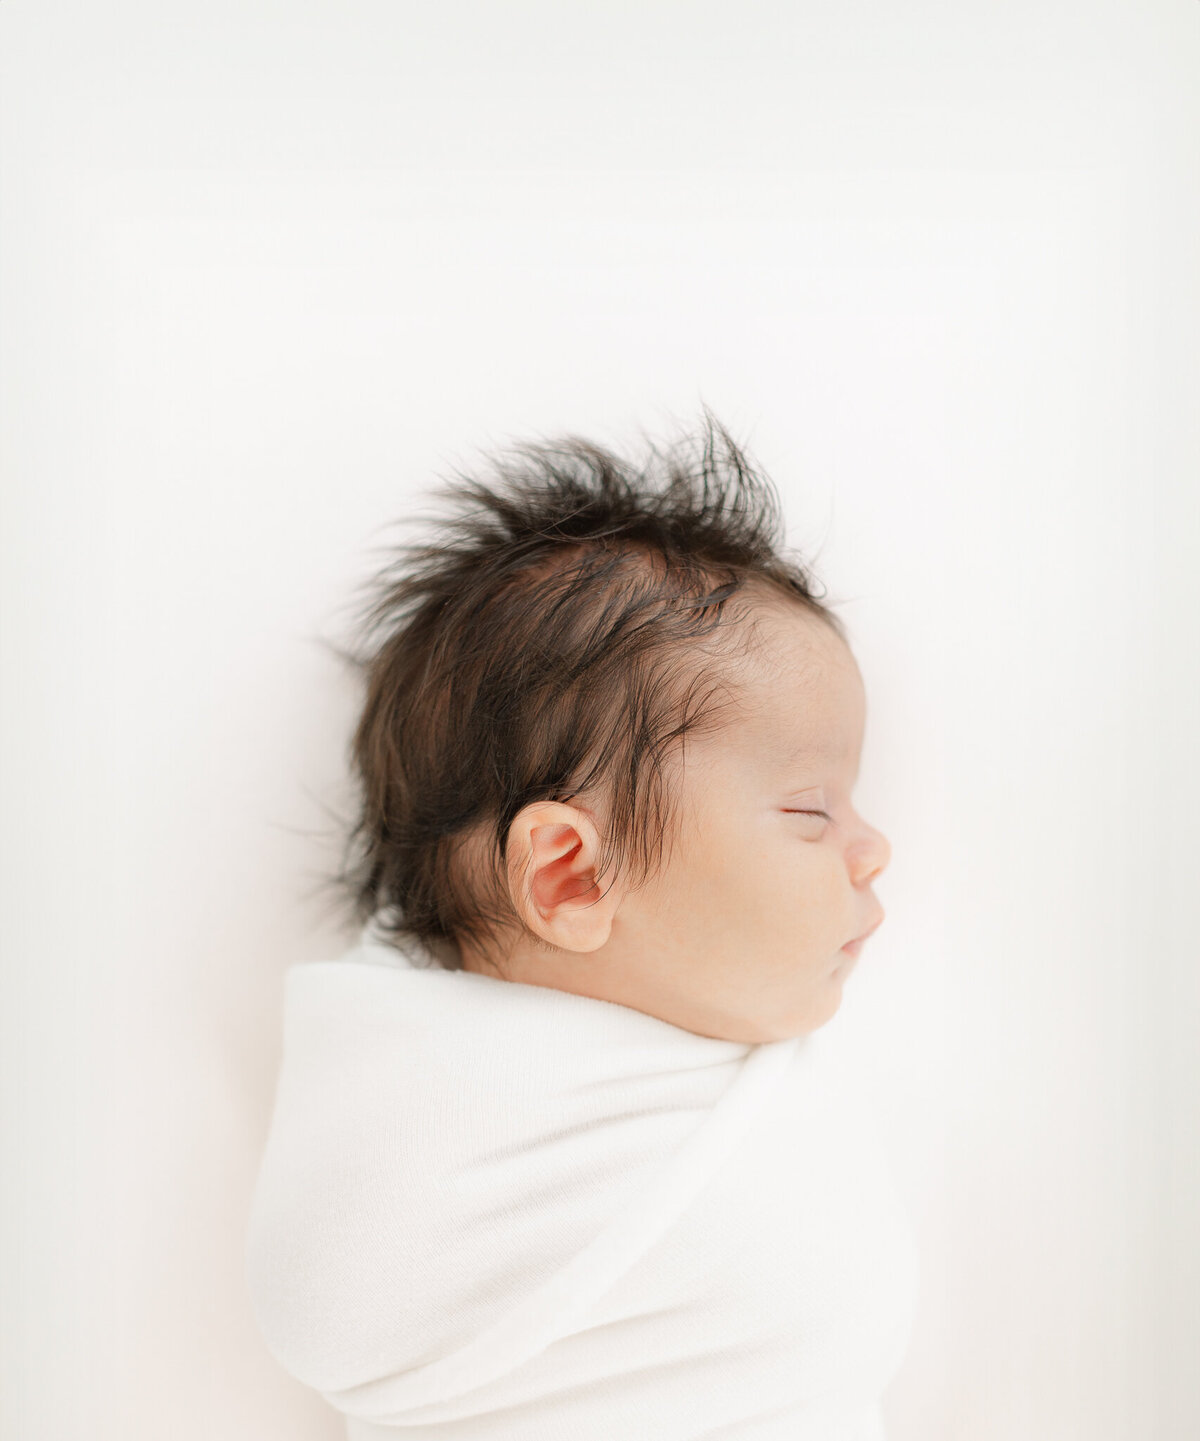 side profile image of newborn baby with dark hair